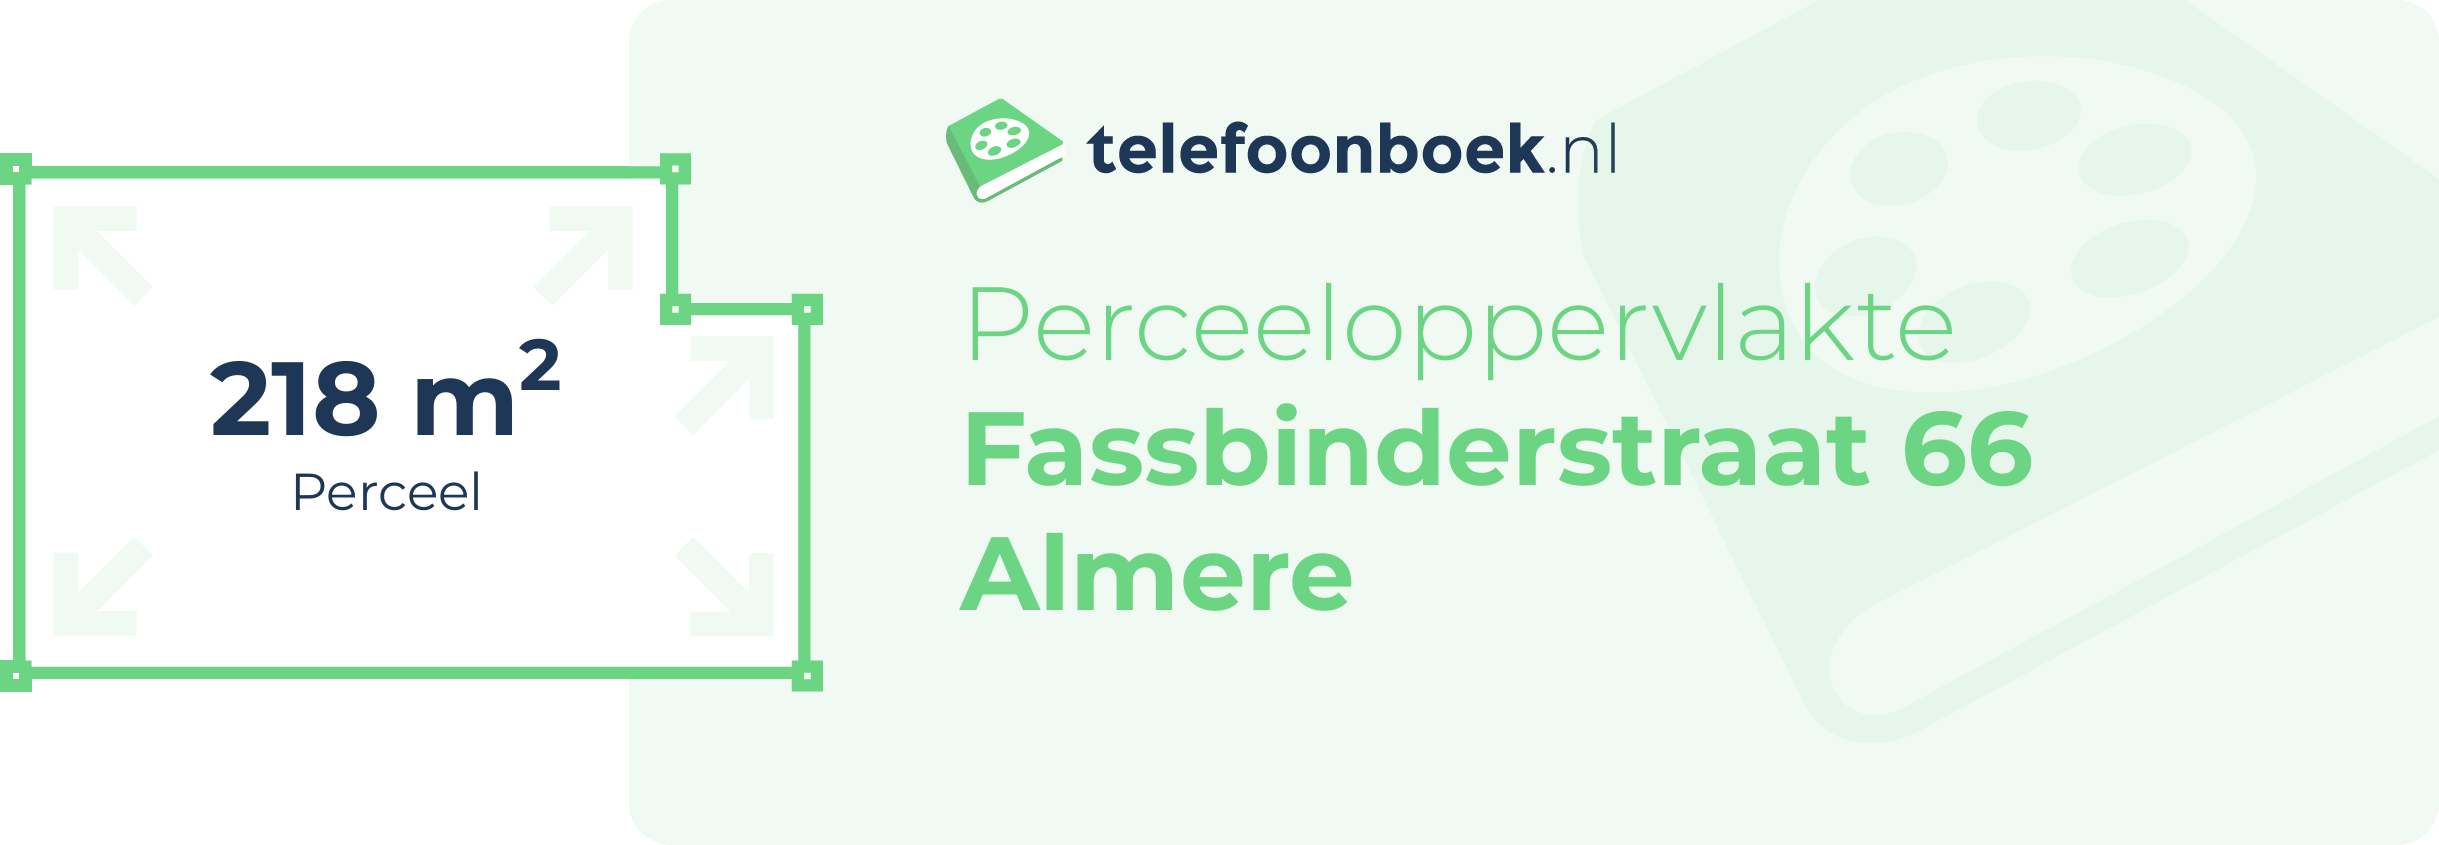 Perceeloppervlakte Fassbinderstraat 66 Almere